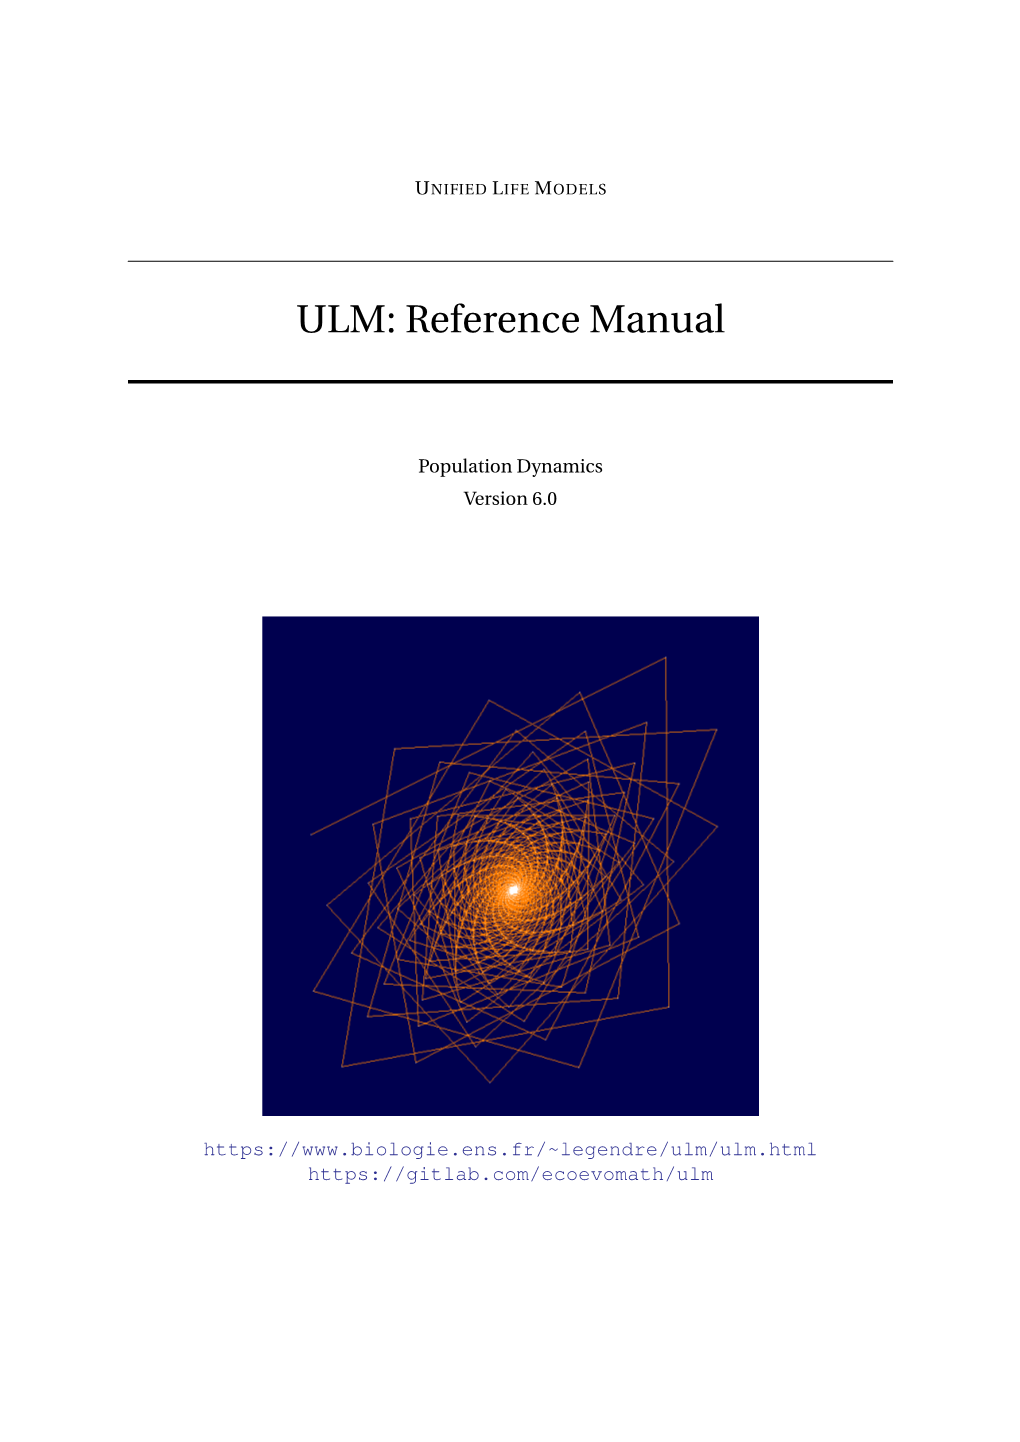 ULM: Reference Manual